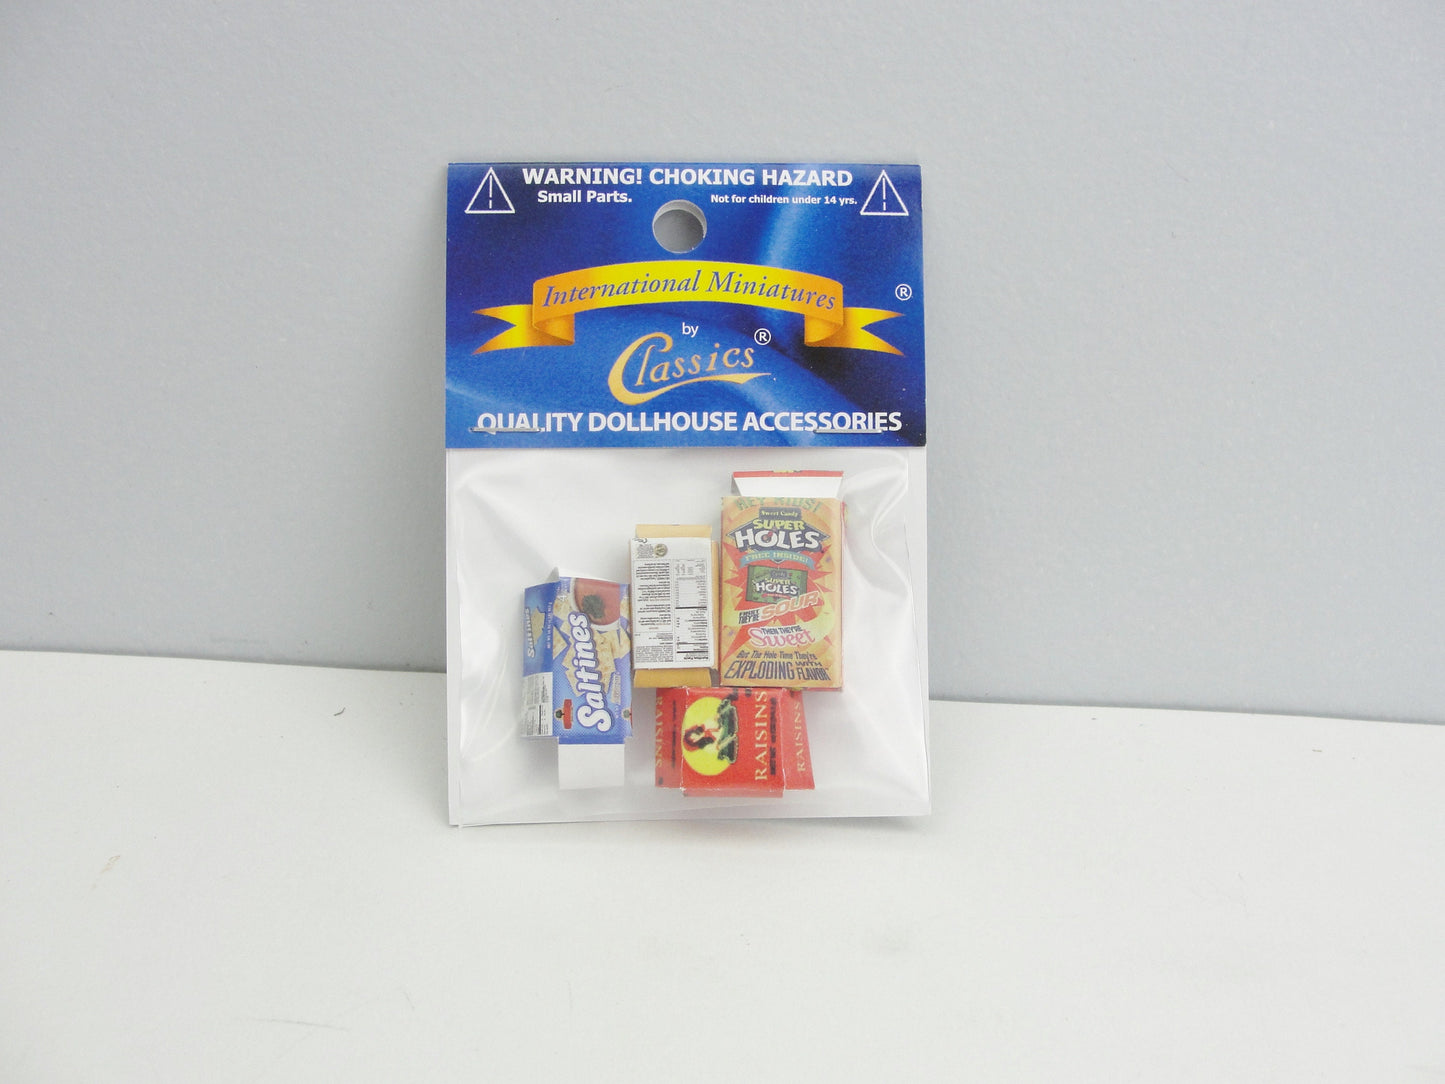 Dollhouse miniature food boxes crackers, cereal, raisins, oatmeal